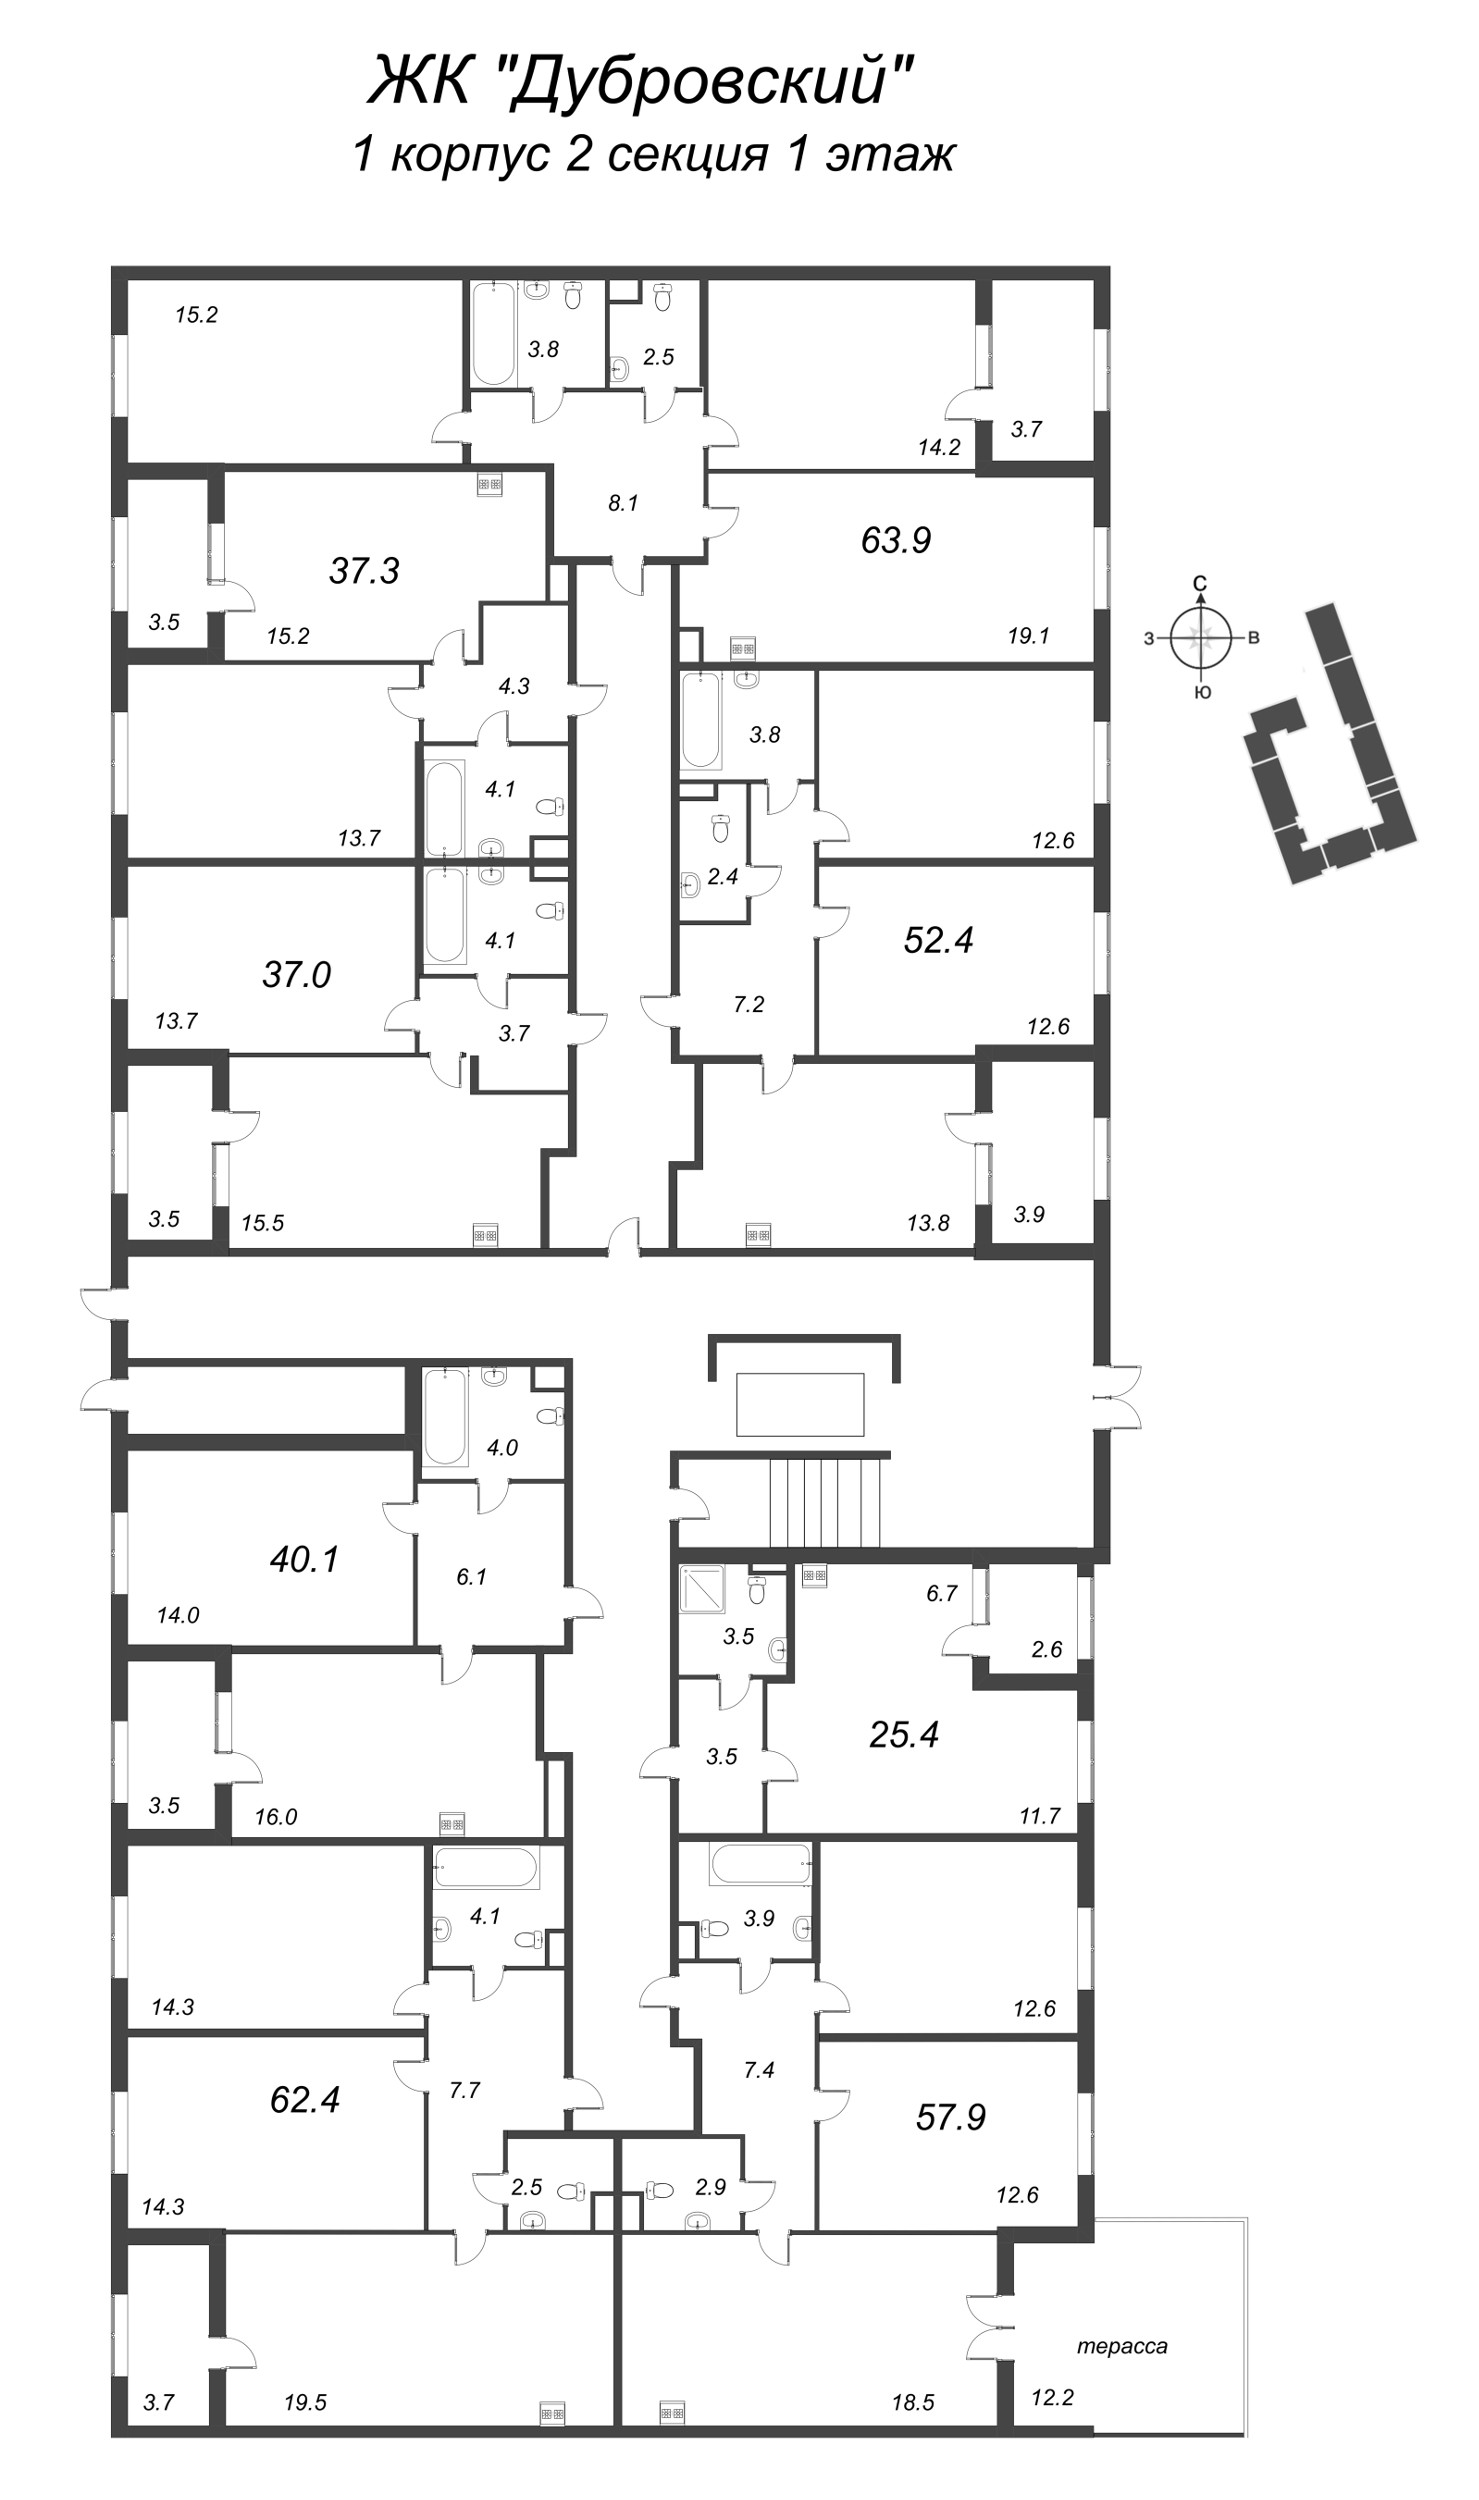 2-комнатная (Евро) квартира, 37 м² - планировка этажа